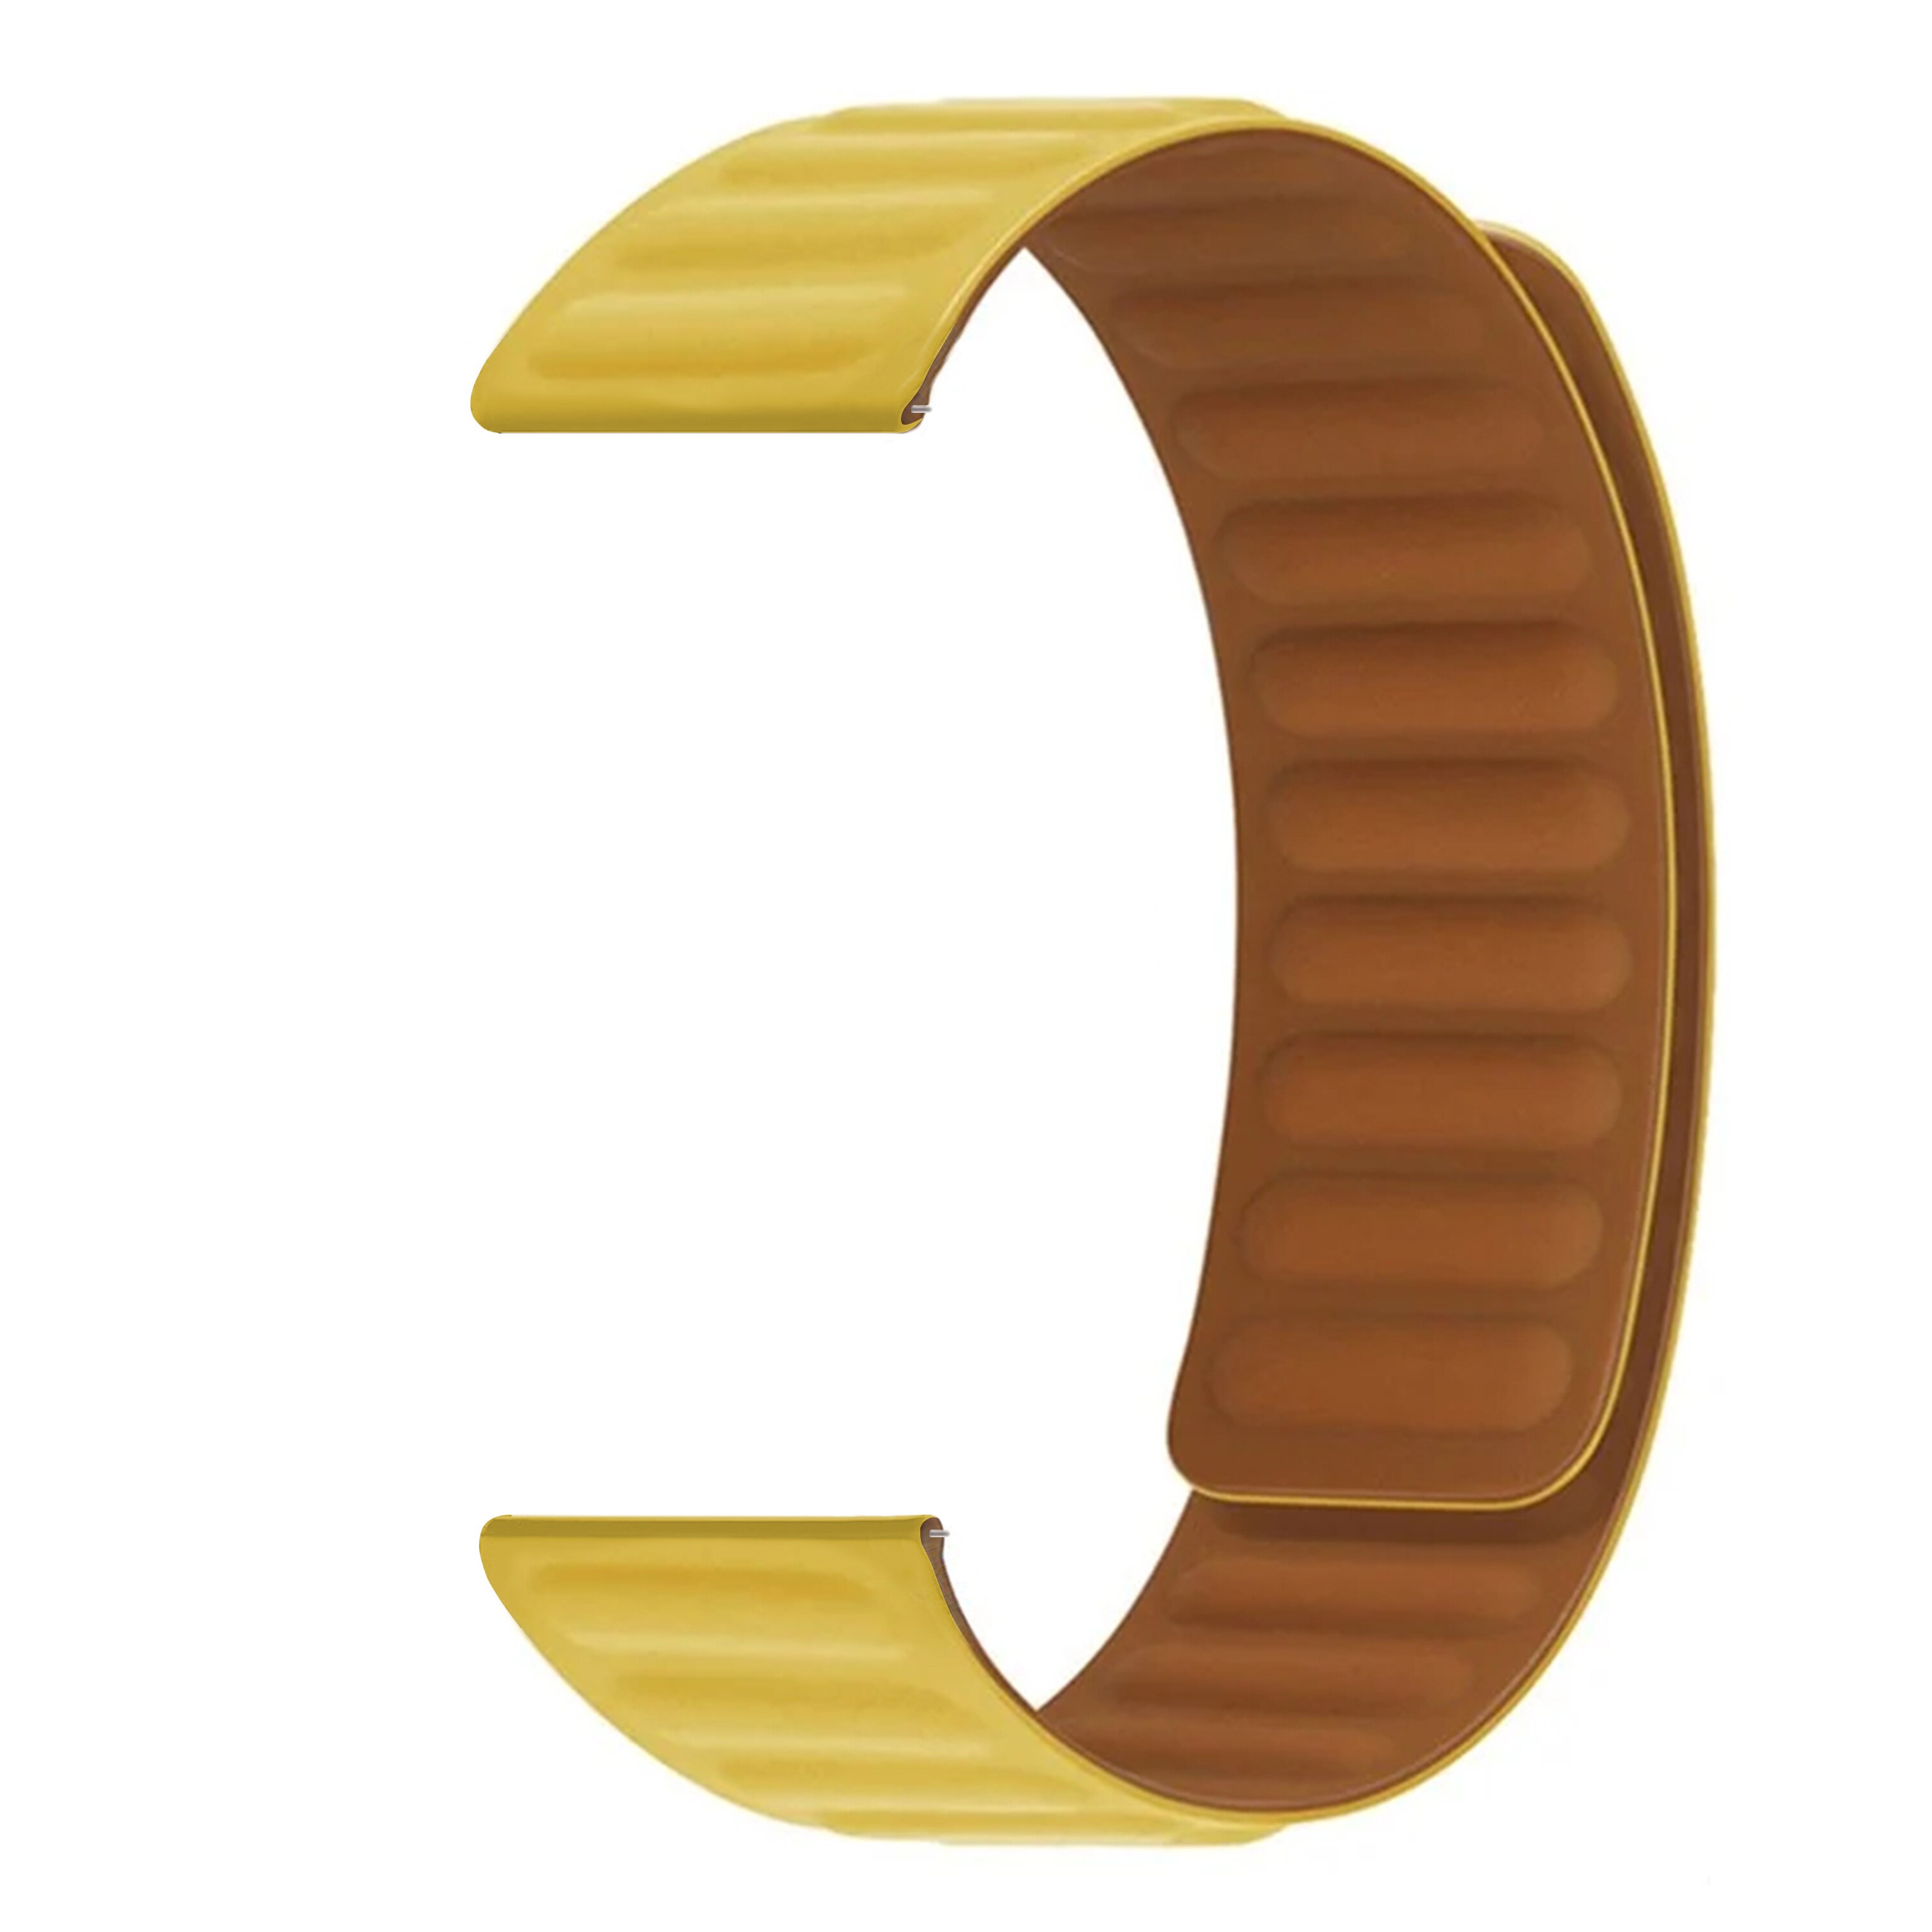 Amazfit Balance Magnetische Armband aus Silikon gelb